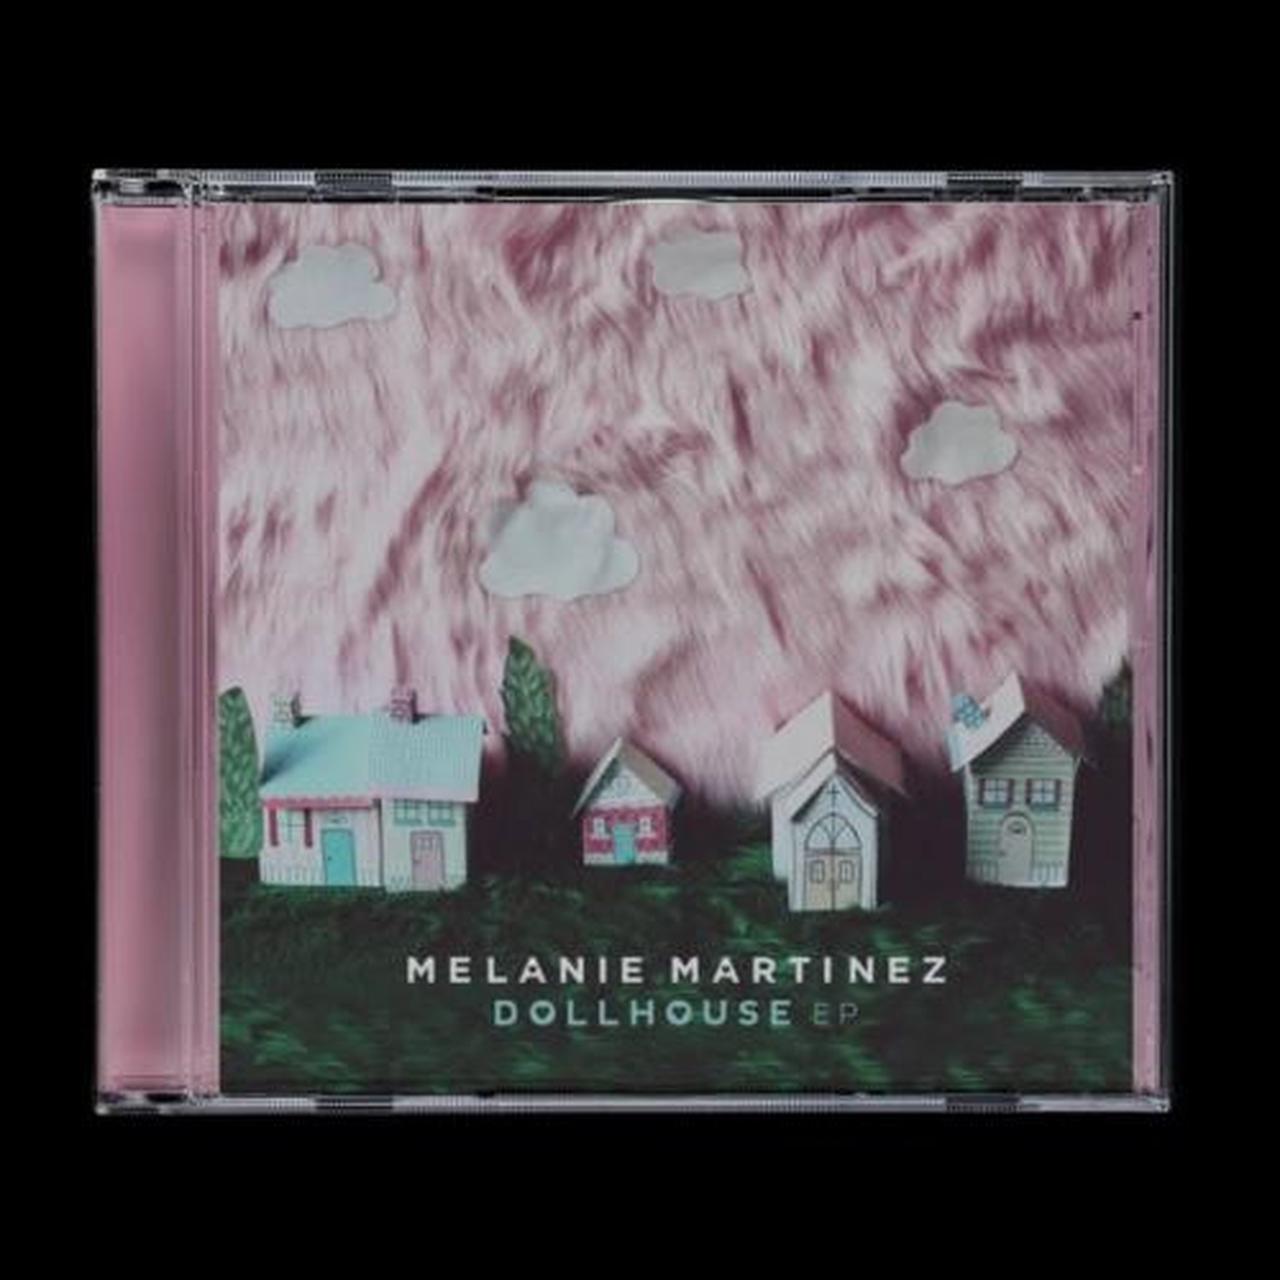 melanie martinez dollhouse album cover